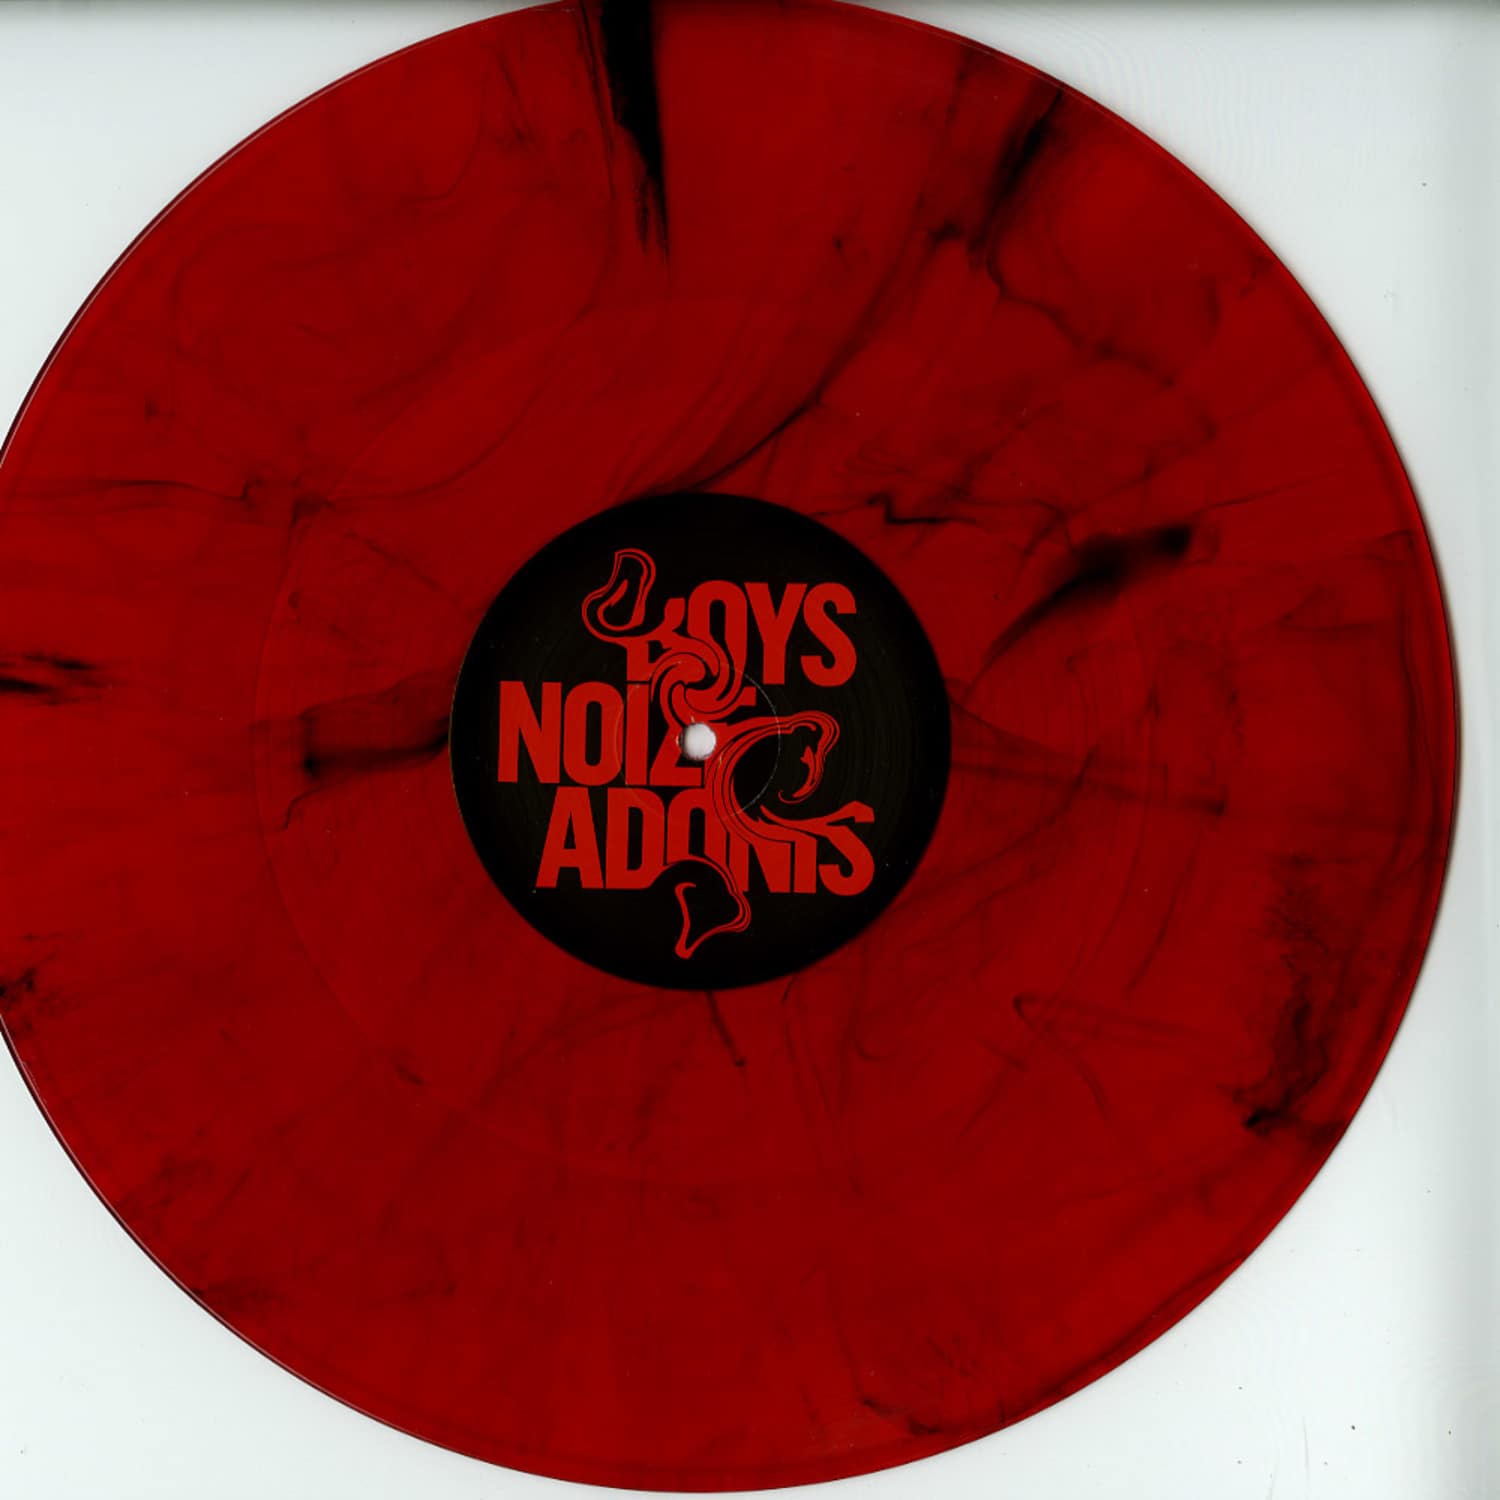 Boys Noize - ADONIS 